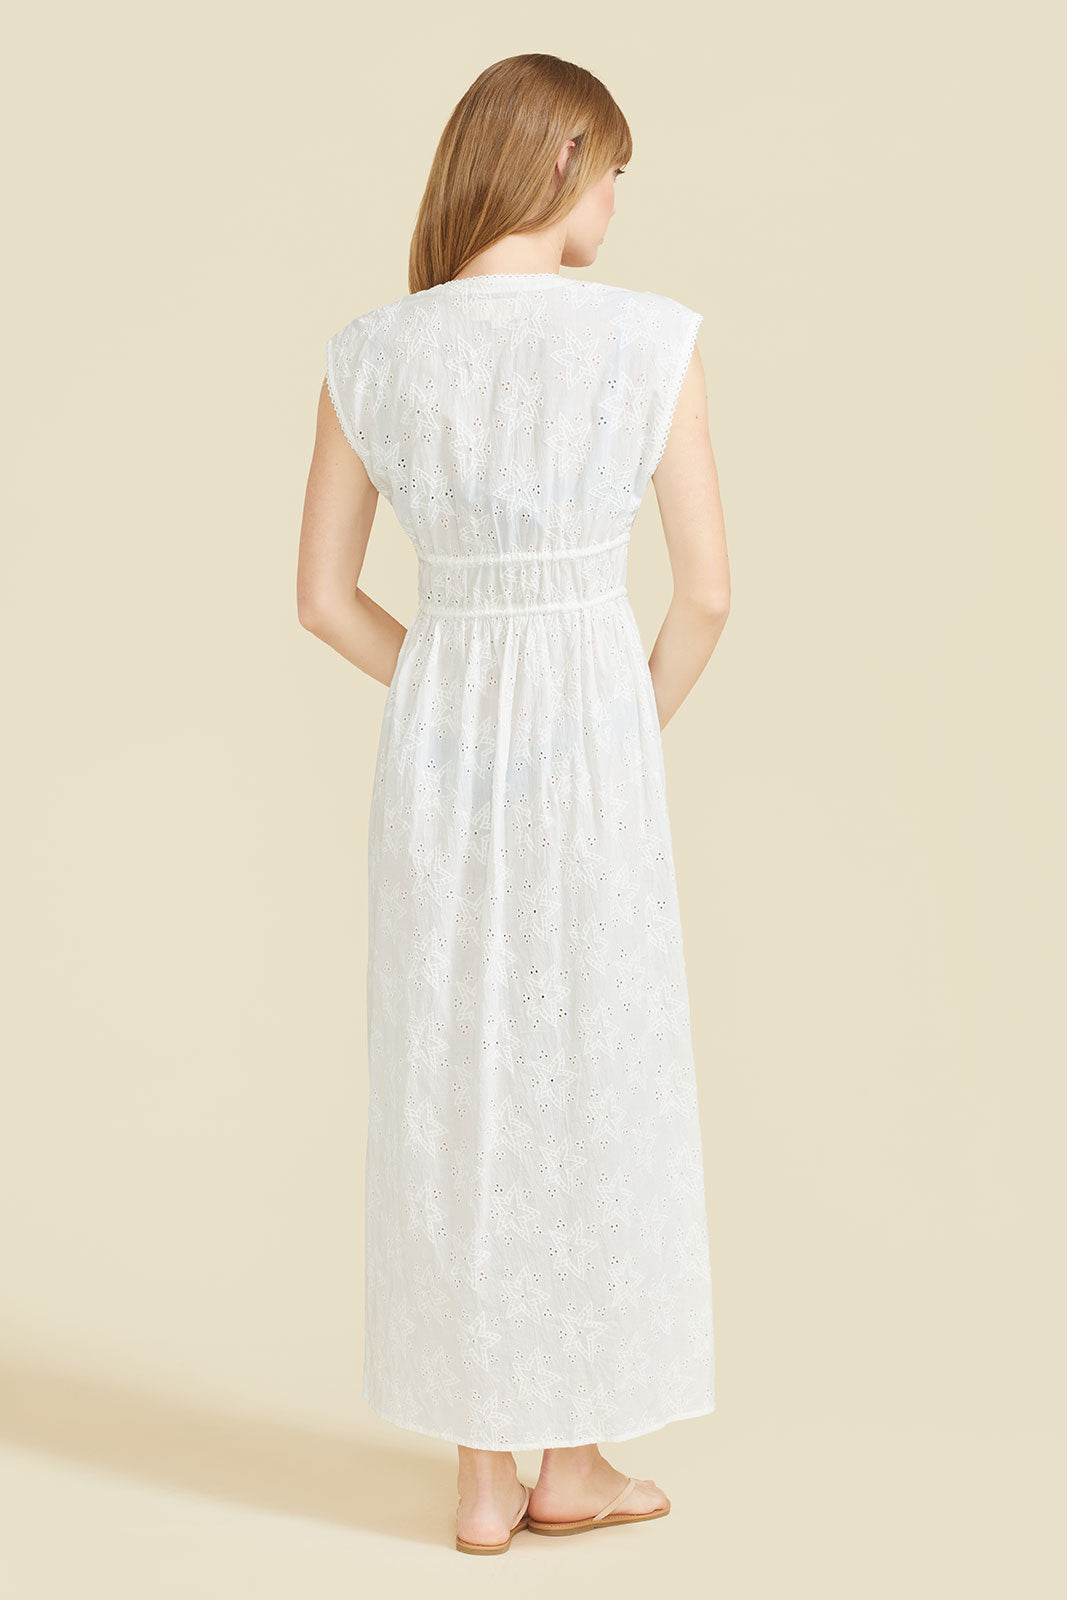 Fontelina Dress - White by Sitano